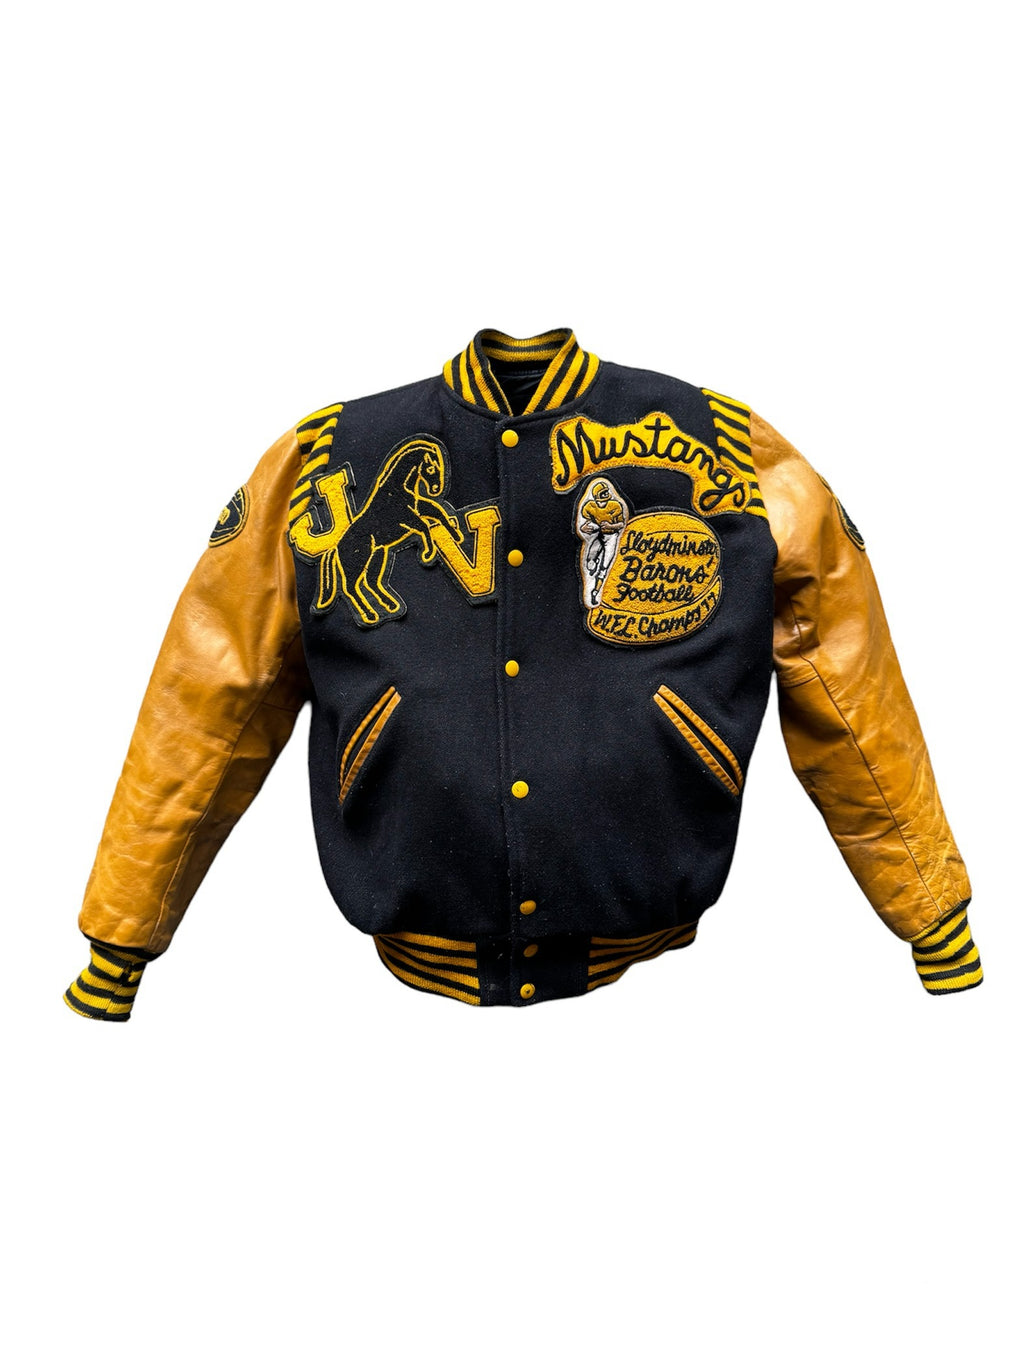 Vintage 1977 All-County Varsity Jacket *Reworked (Medium)